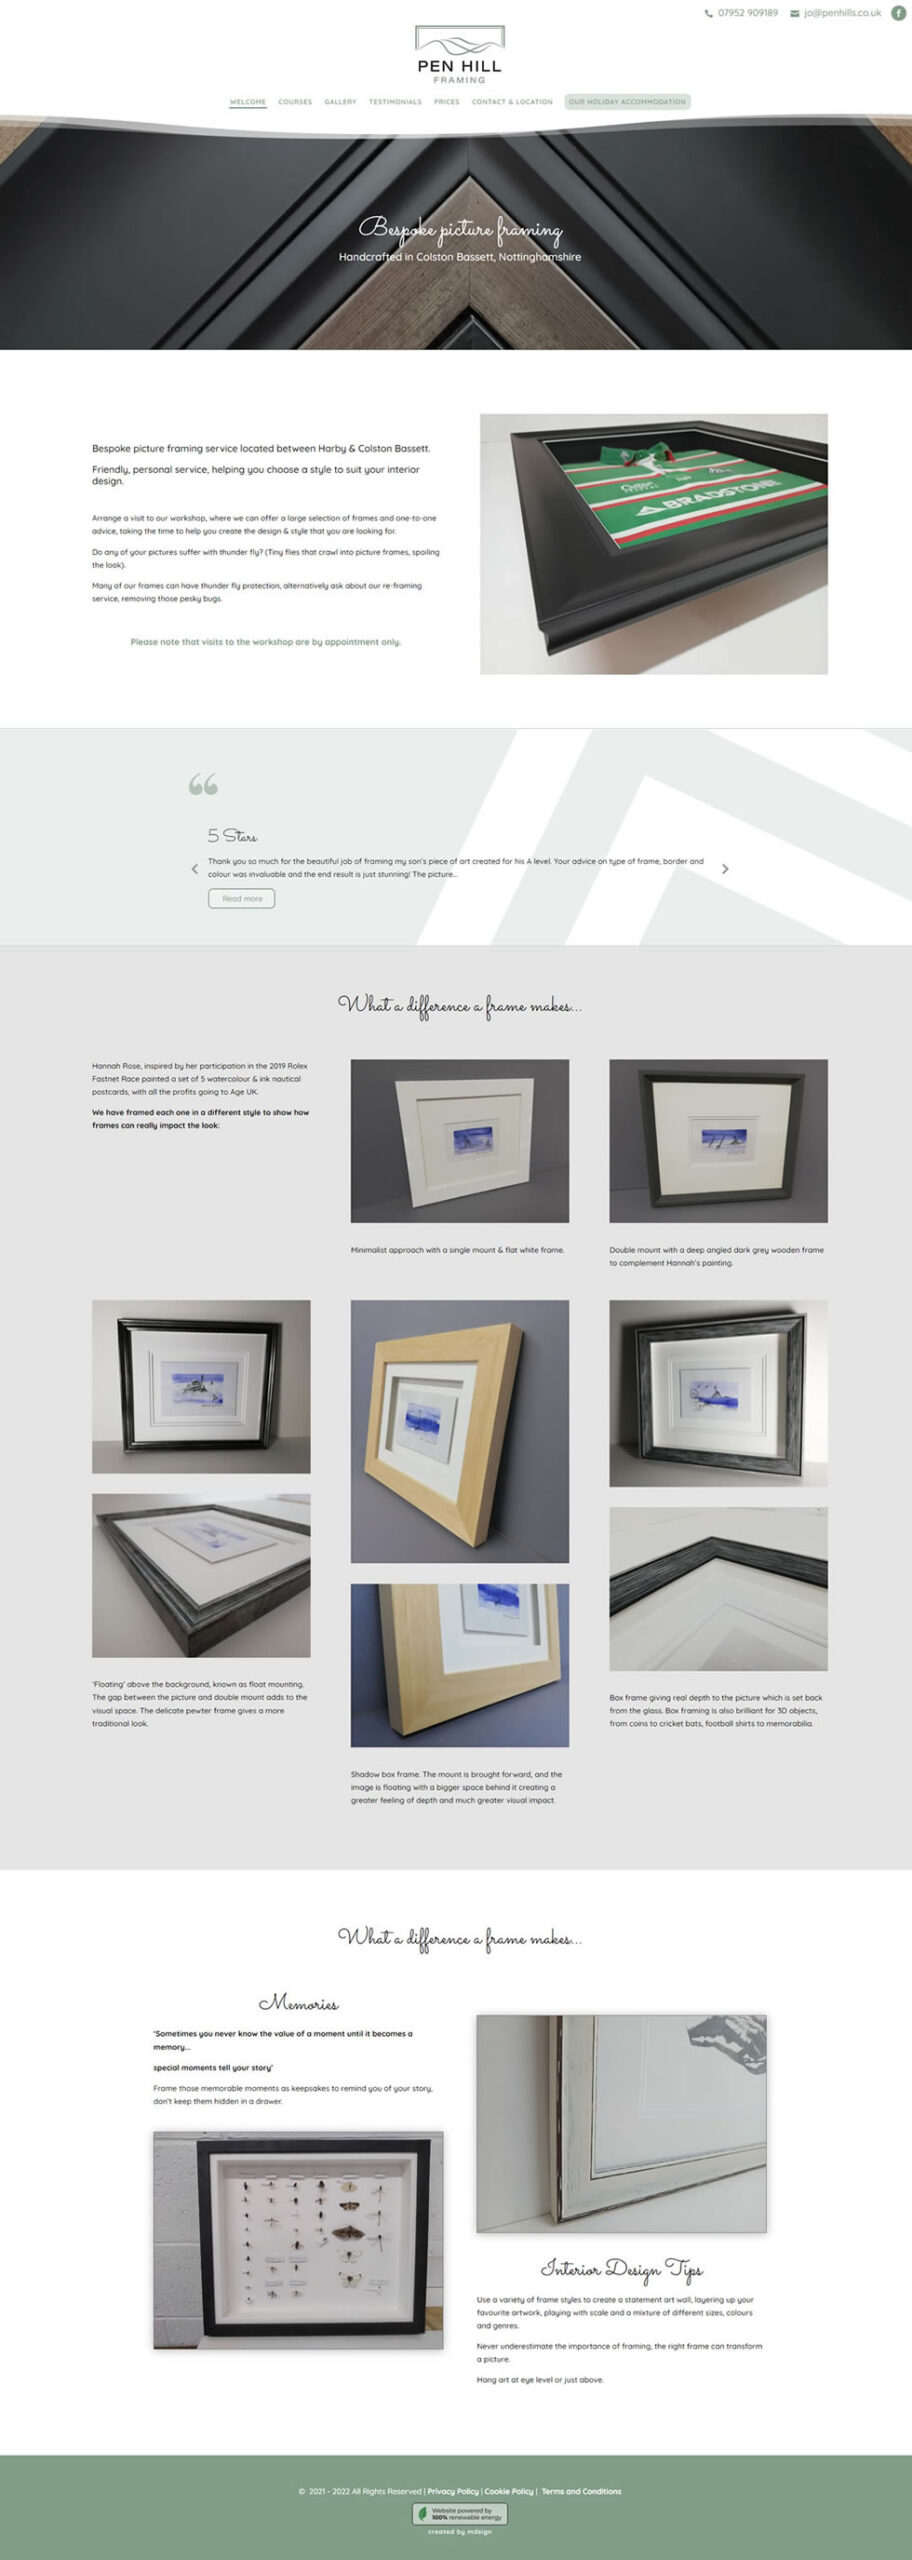 Pen Hill Framing website design by Mdsign